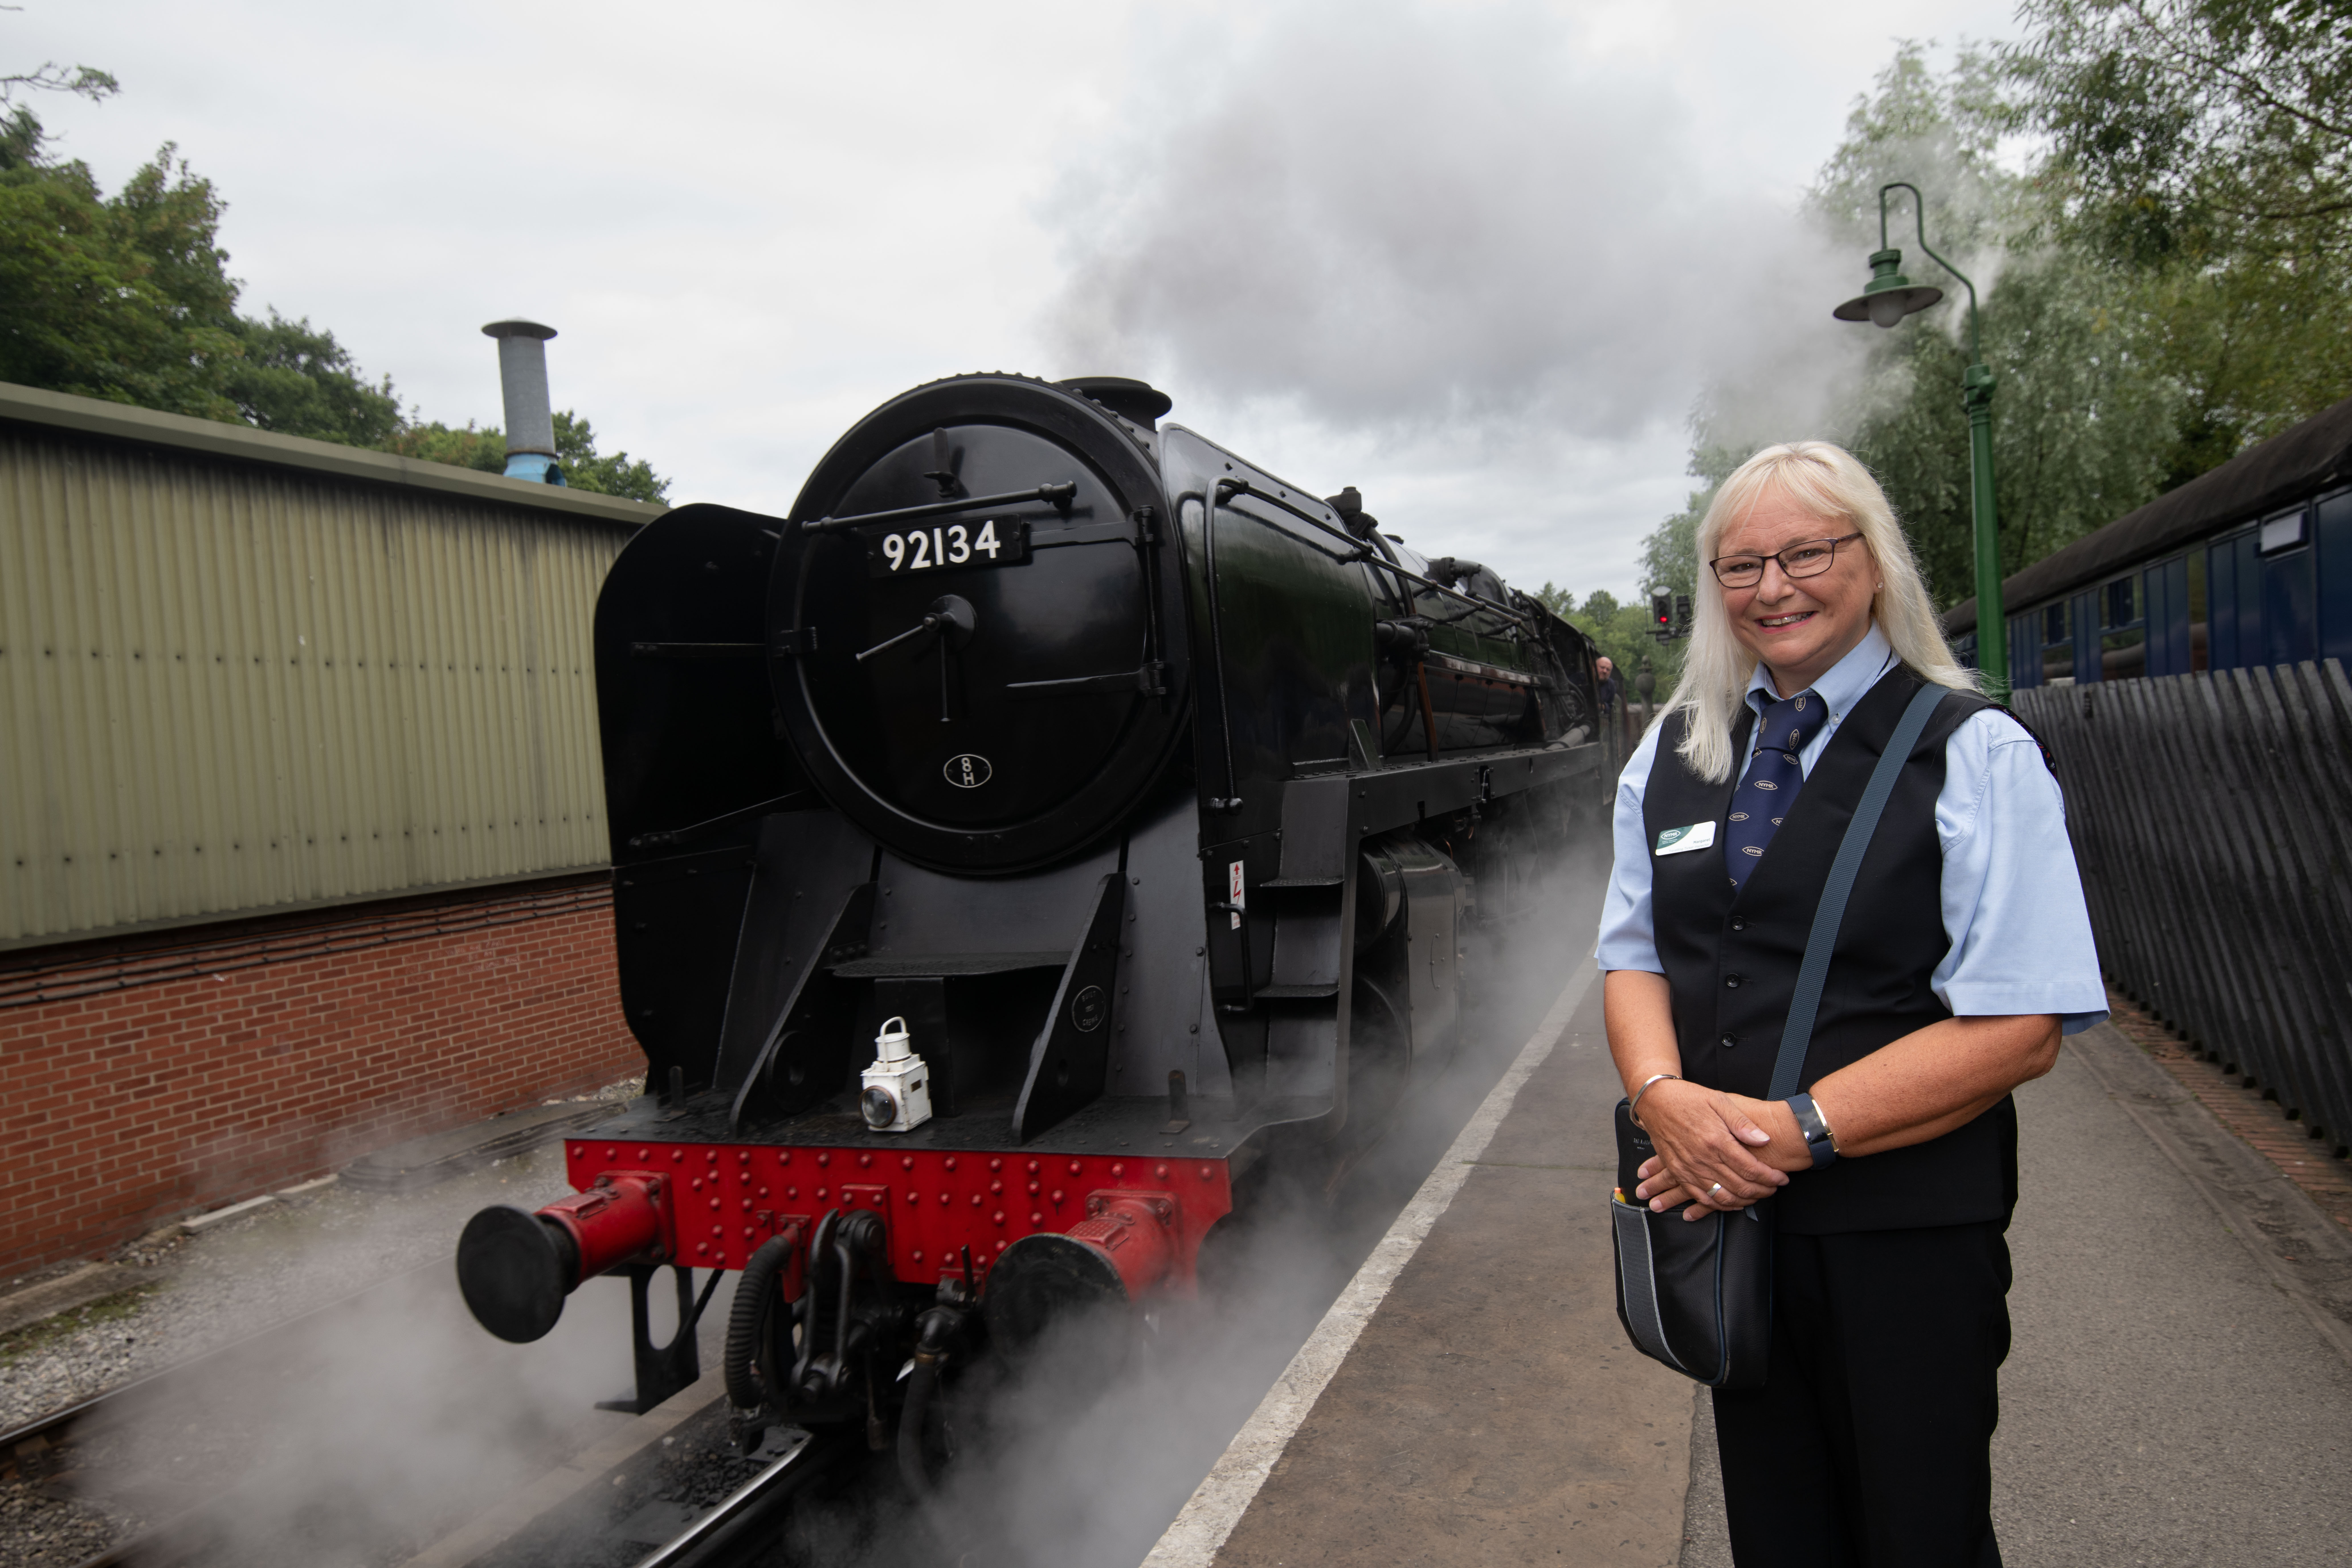 Volunteer Margaret Stainburn standing and smiling on the train station platform.